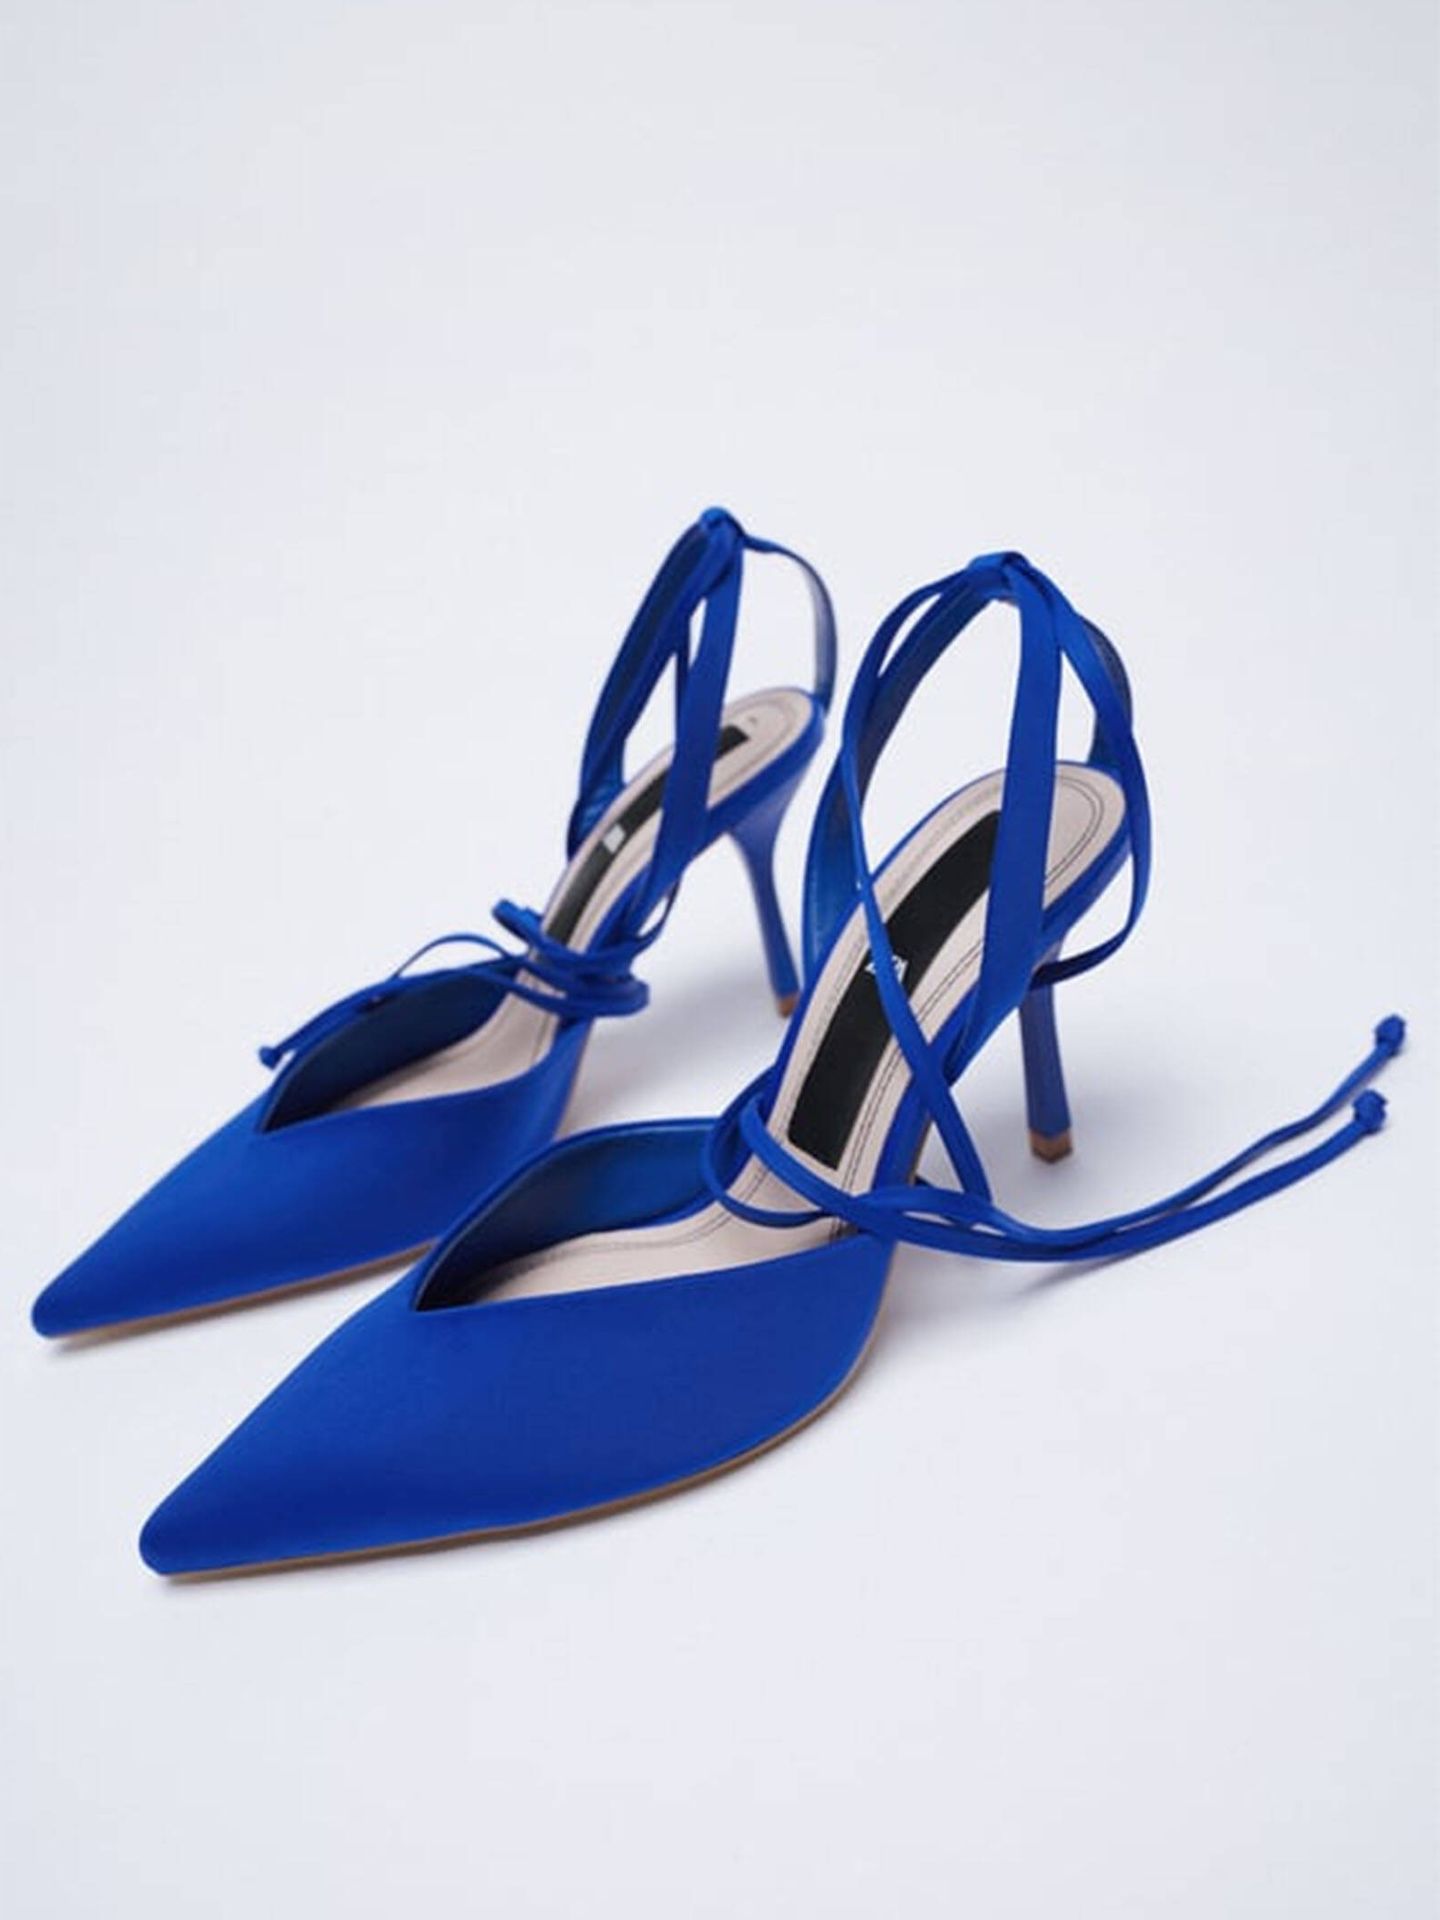 Zapatos azules para un look sofisticado de Zara. (Cortesía)